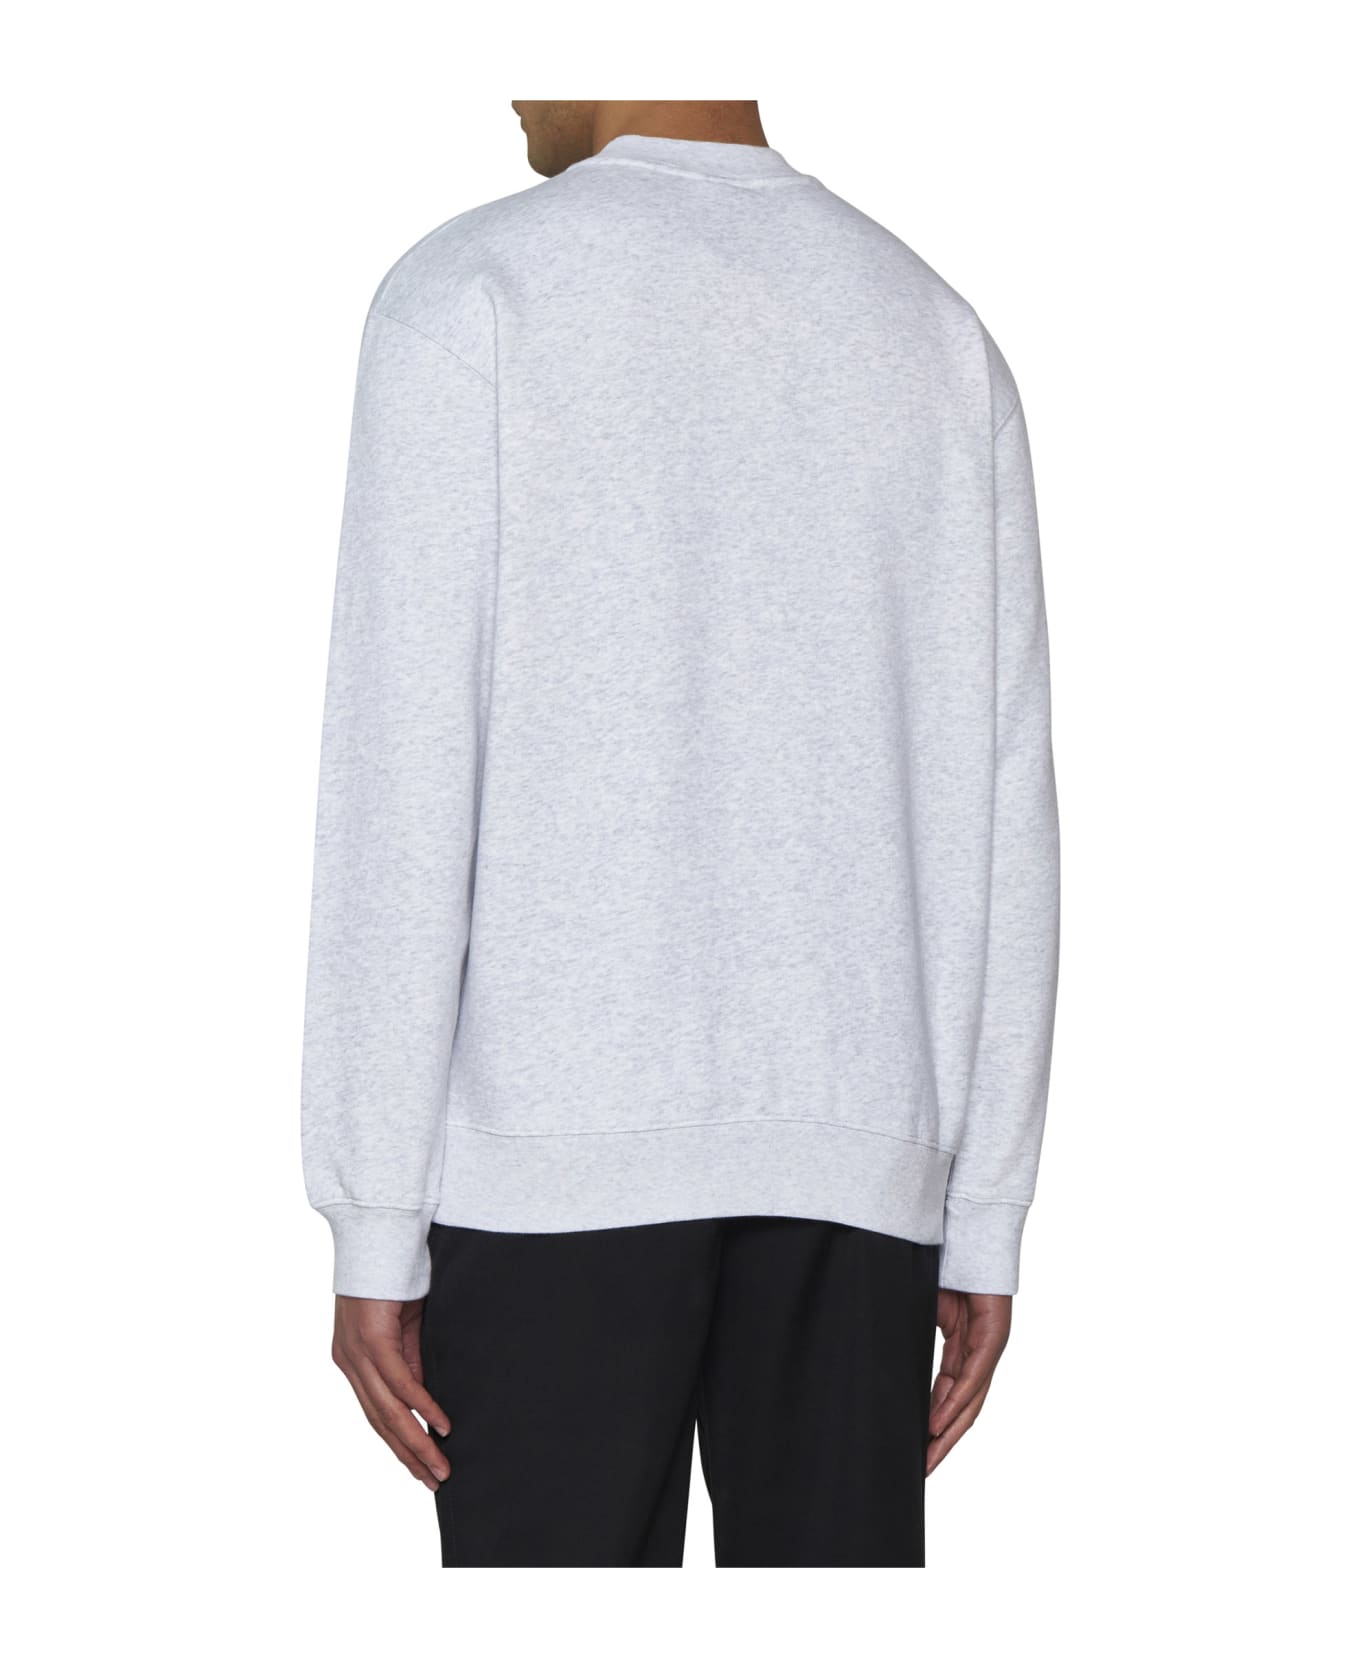 Jacquemus Gros Grain Cotton Sweatshirt - Grey